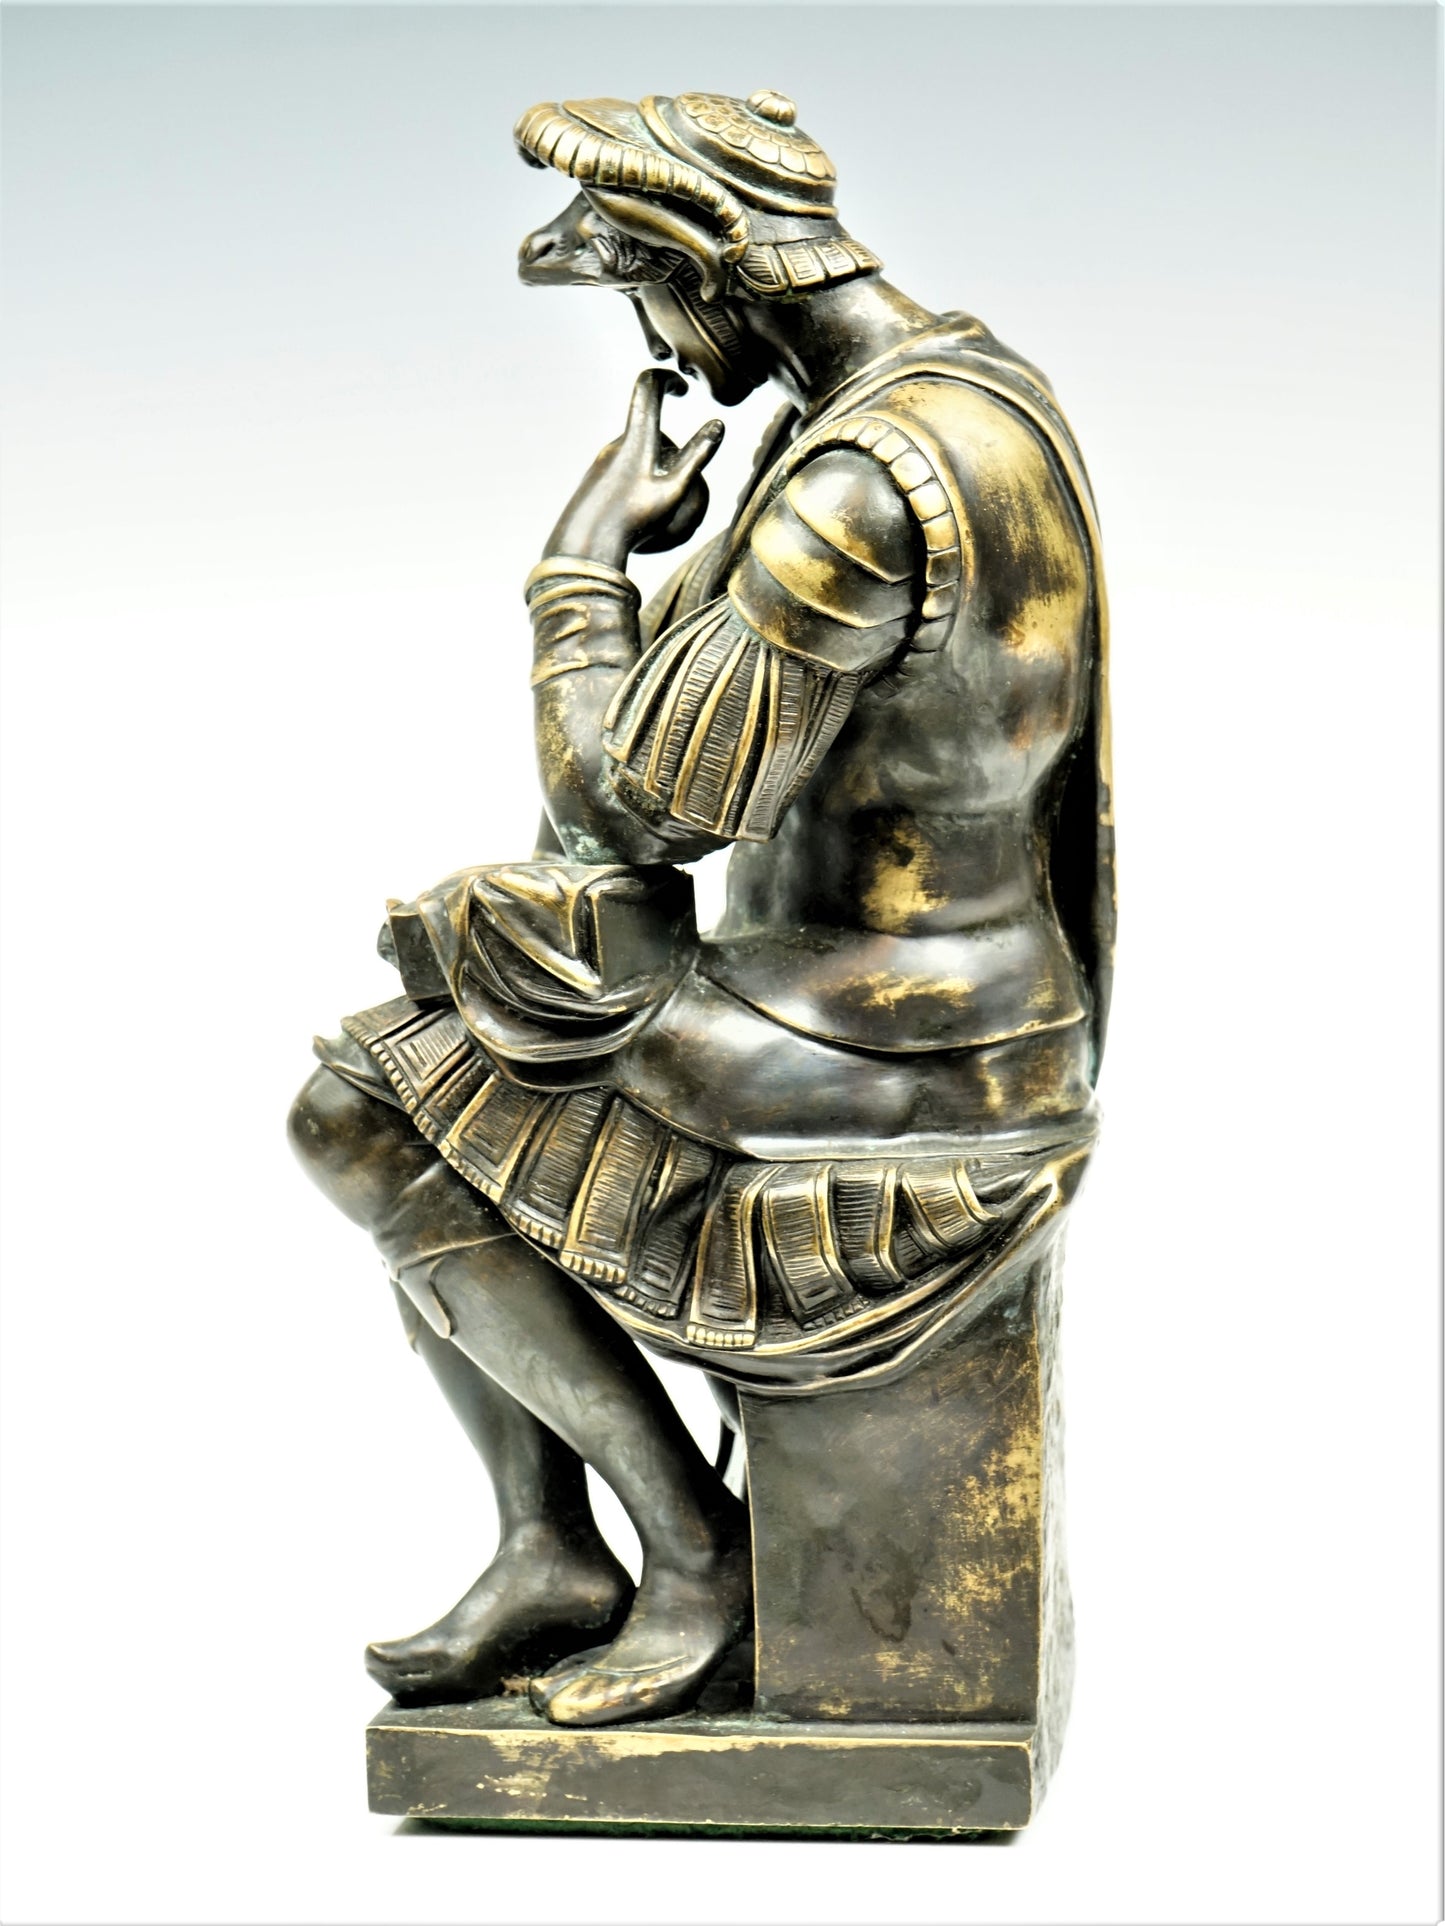 19th Century French Bronze sculpture "Lorenzo de Medici"